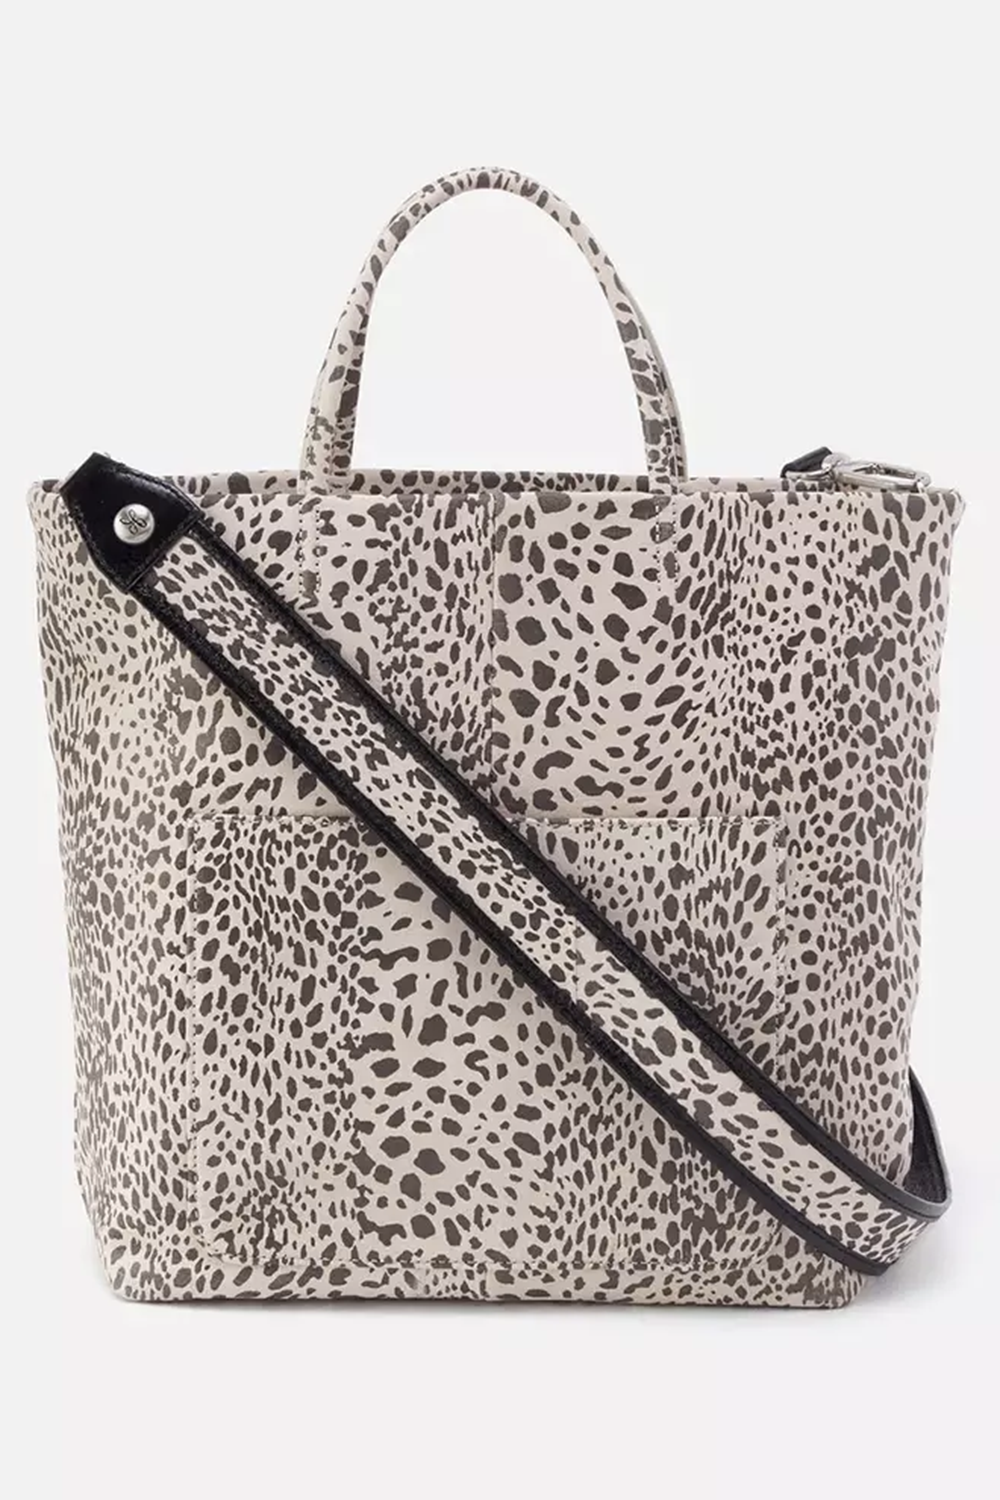 SIDEWALK SALE ITEM - Tripp Tote Bag - Cheetah Print – Shop